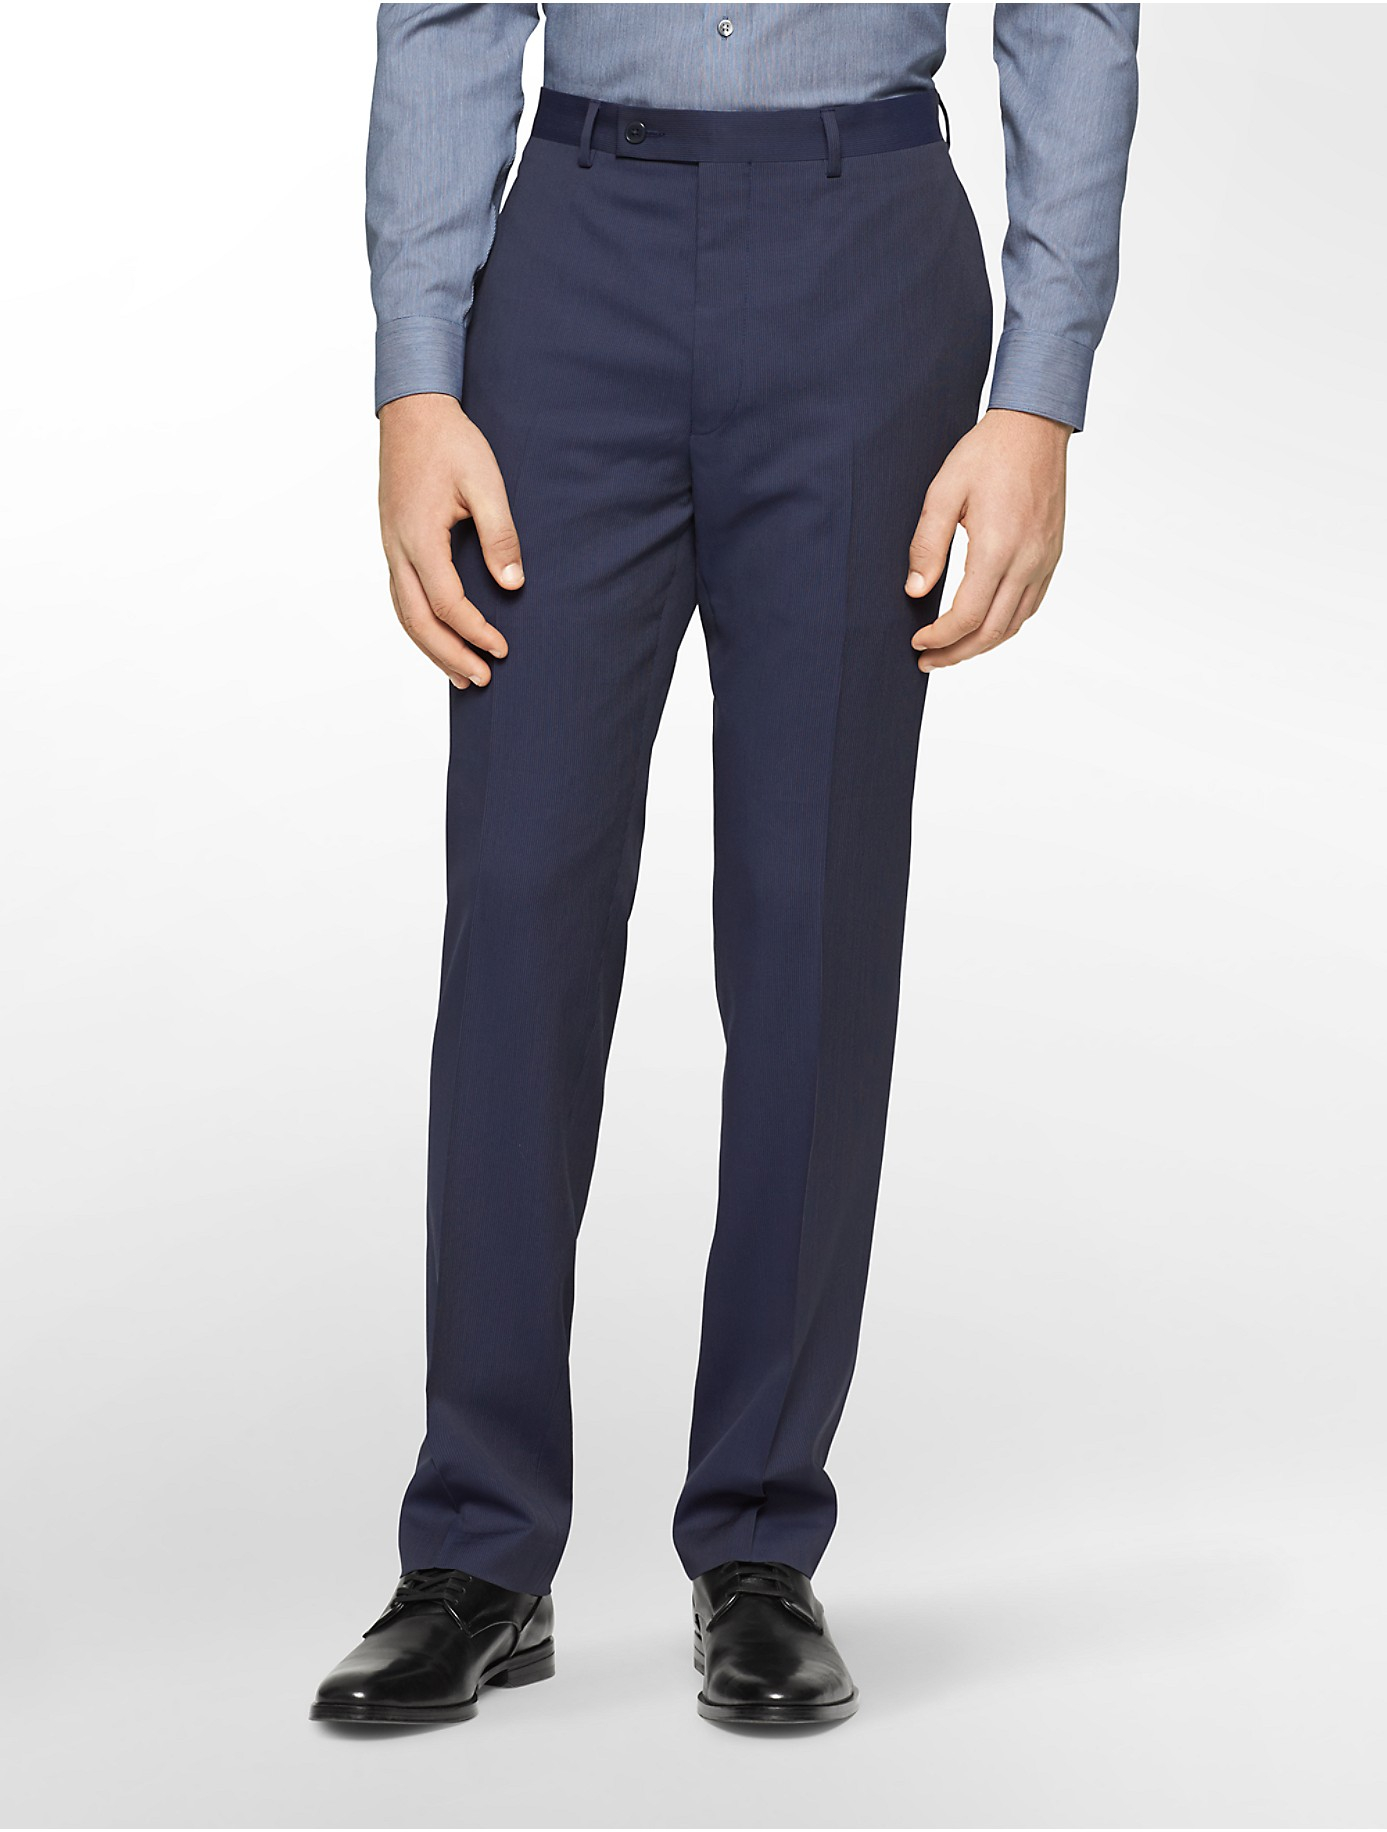 Lyst - Calvin Klein White Label Body Slim Fit Navy Pinstripe Suit Pants ...